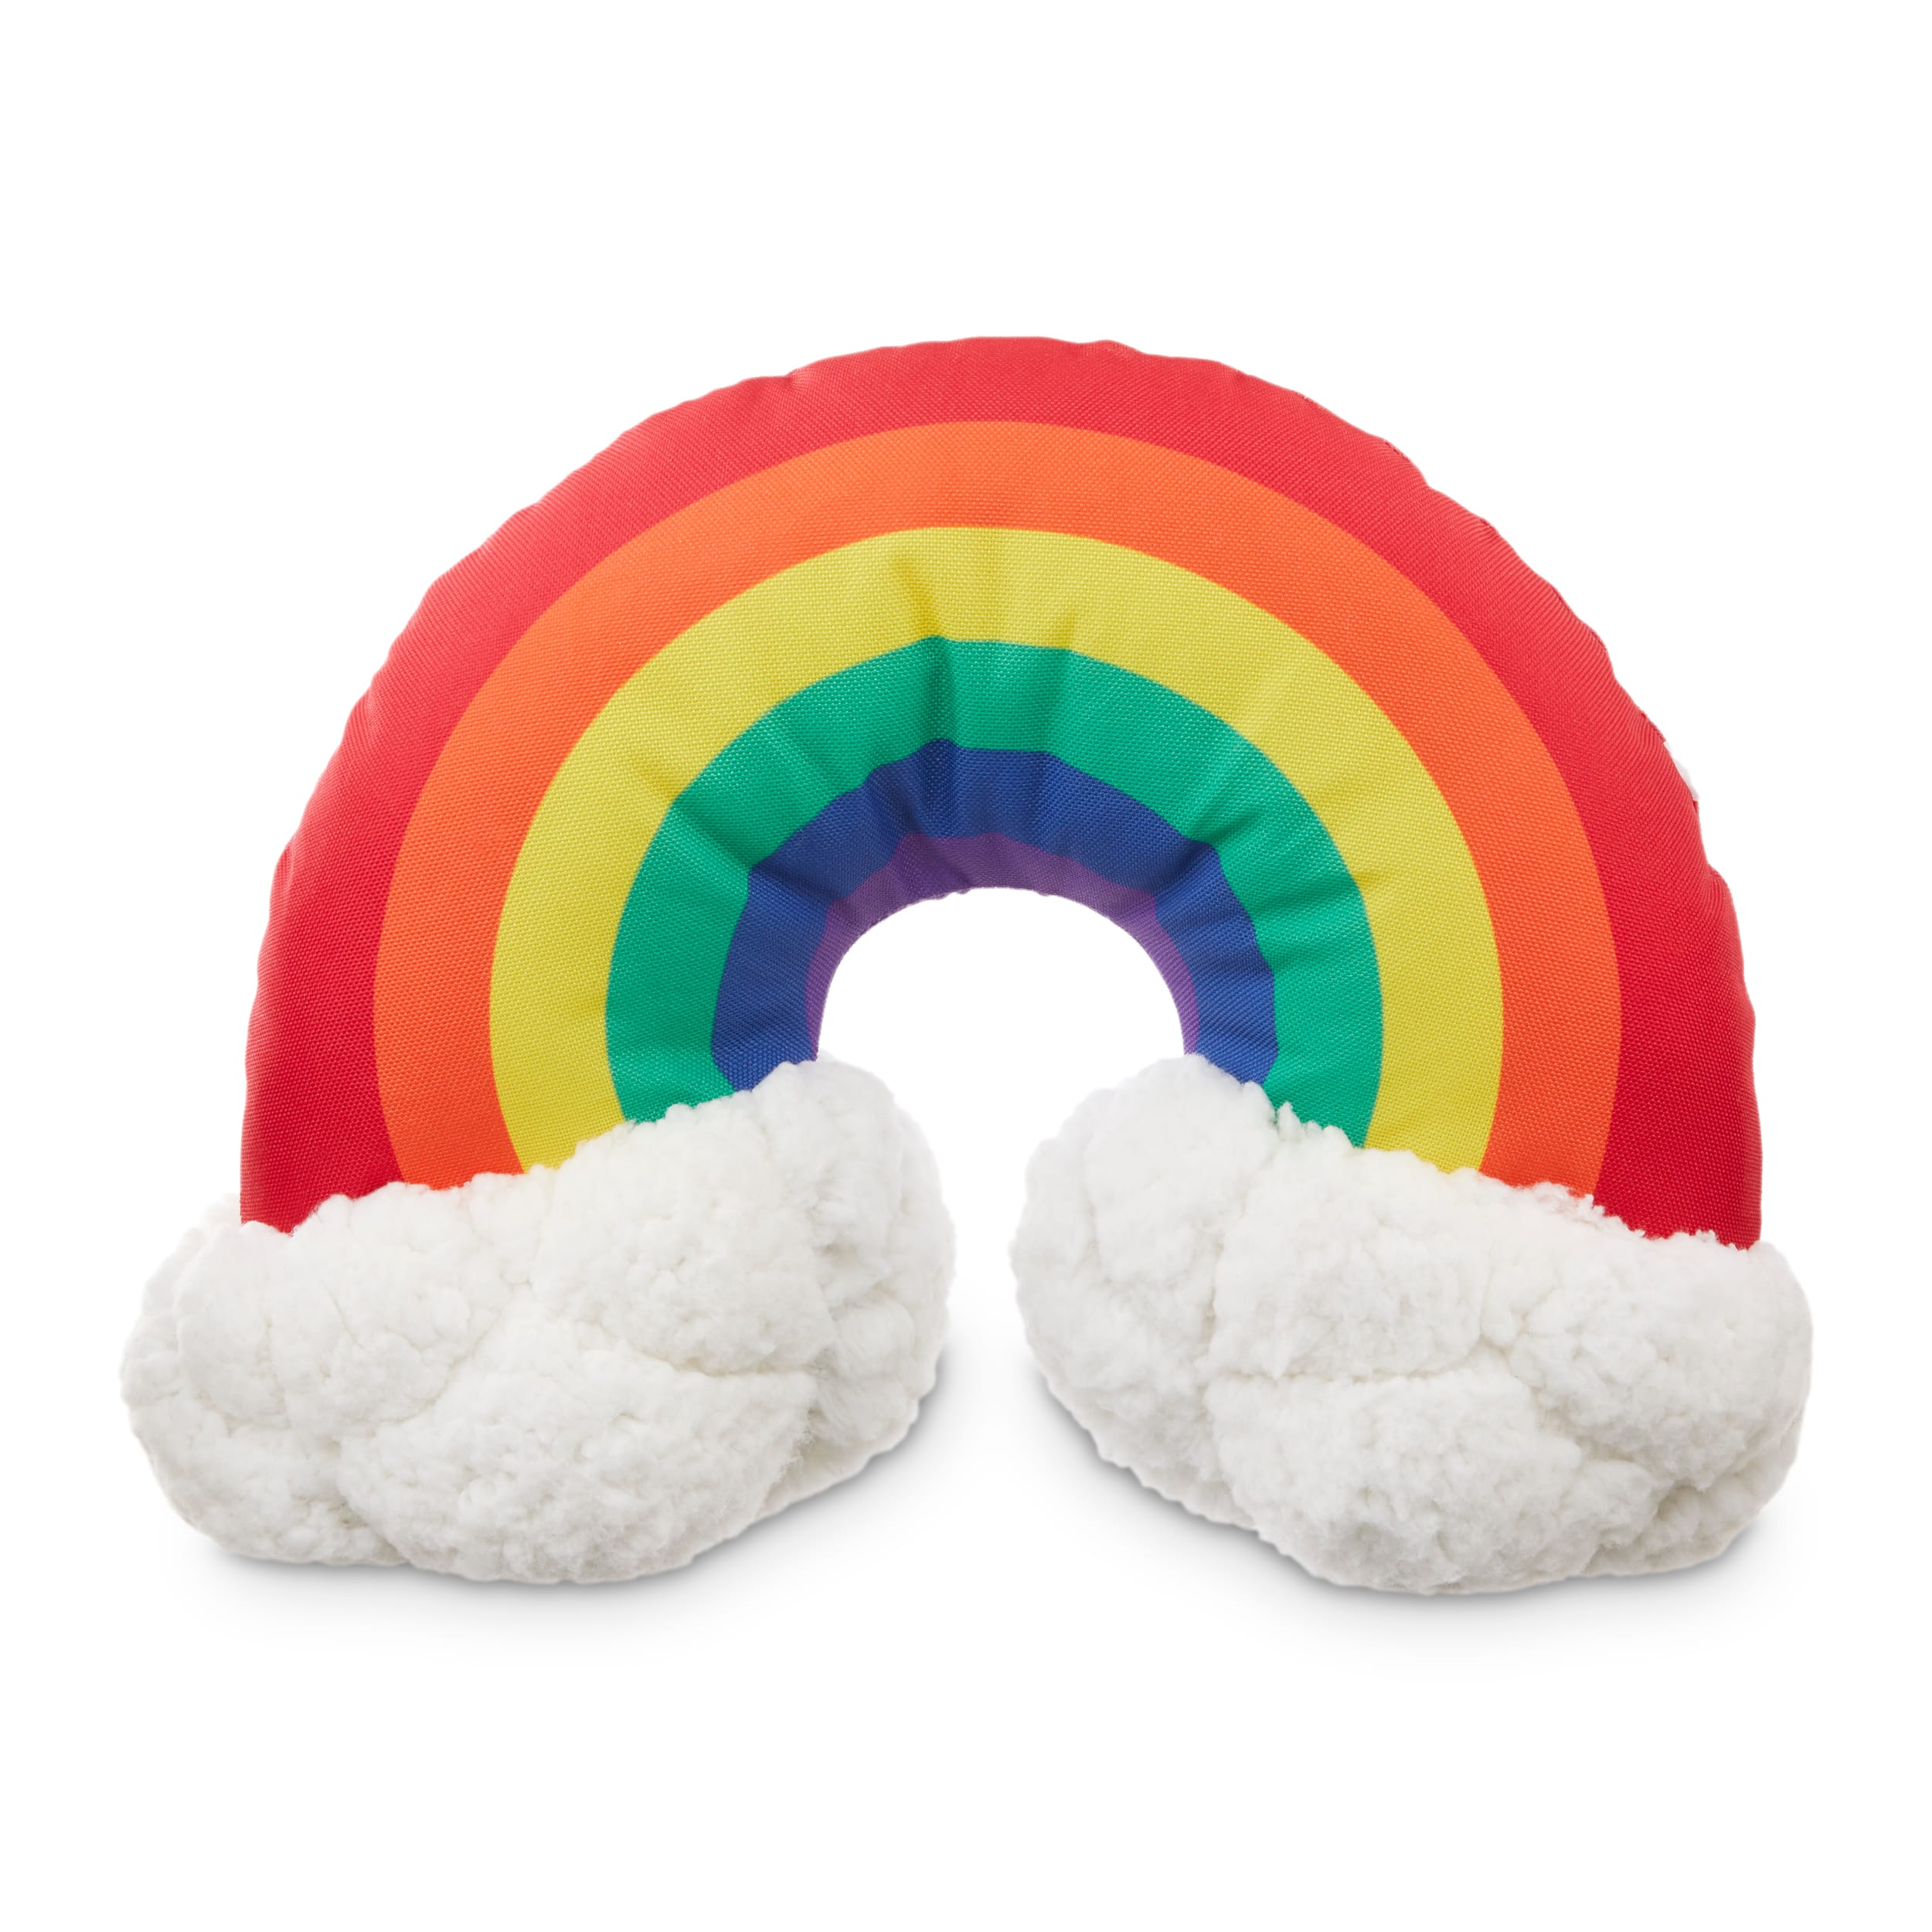 rainbow soft toy